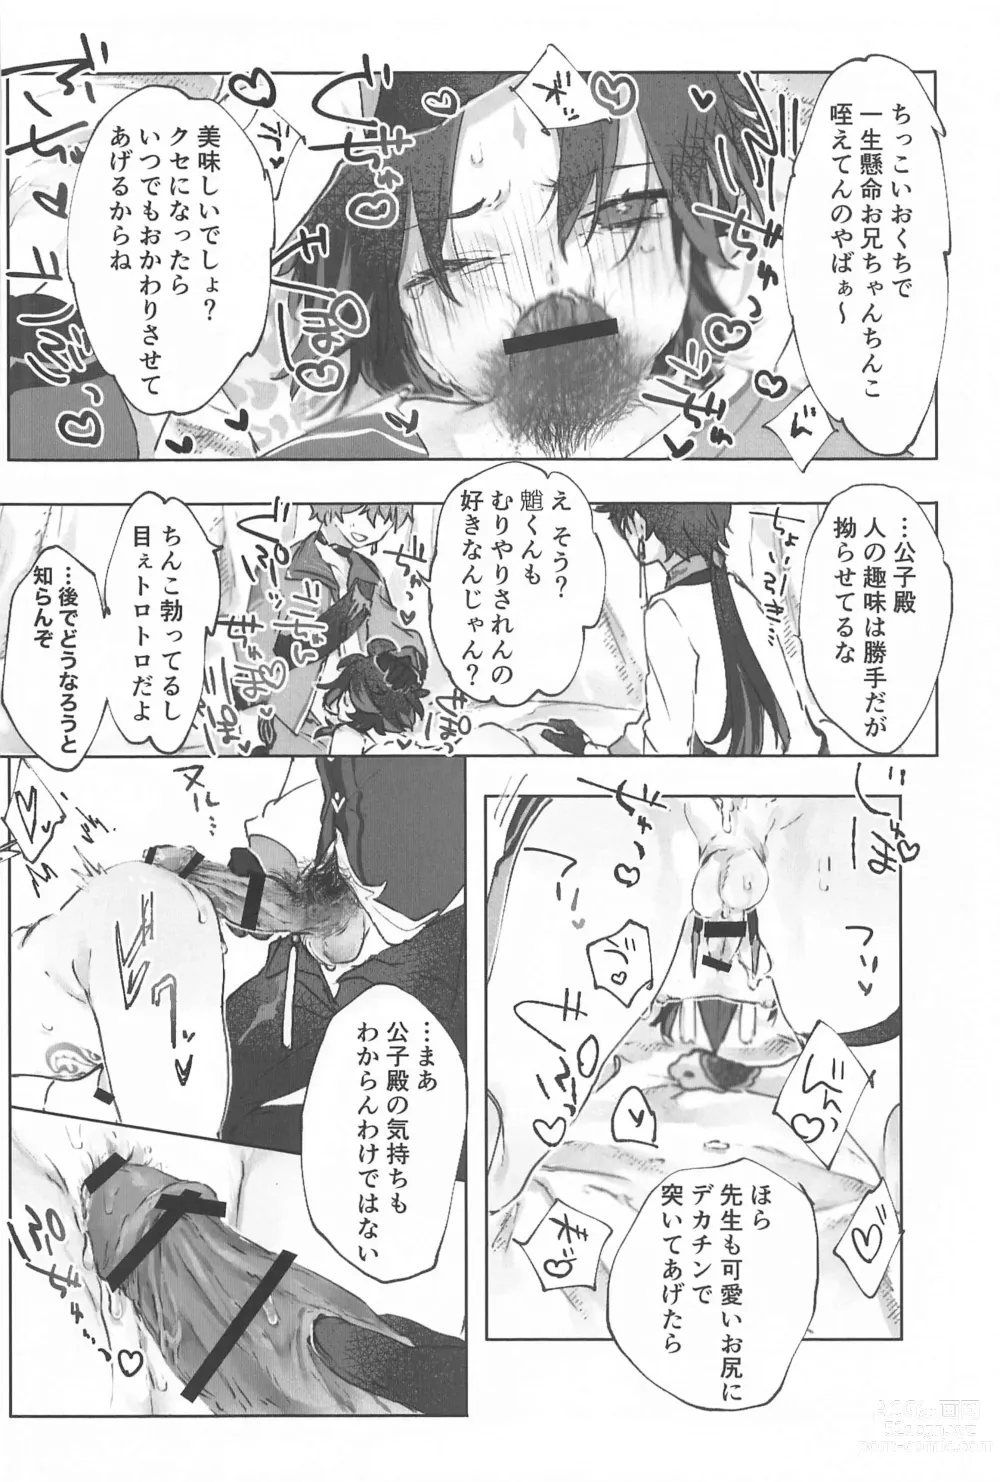 Page 36 of doujinshi Okawari.